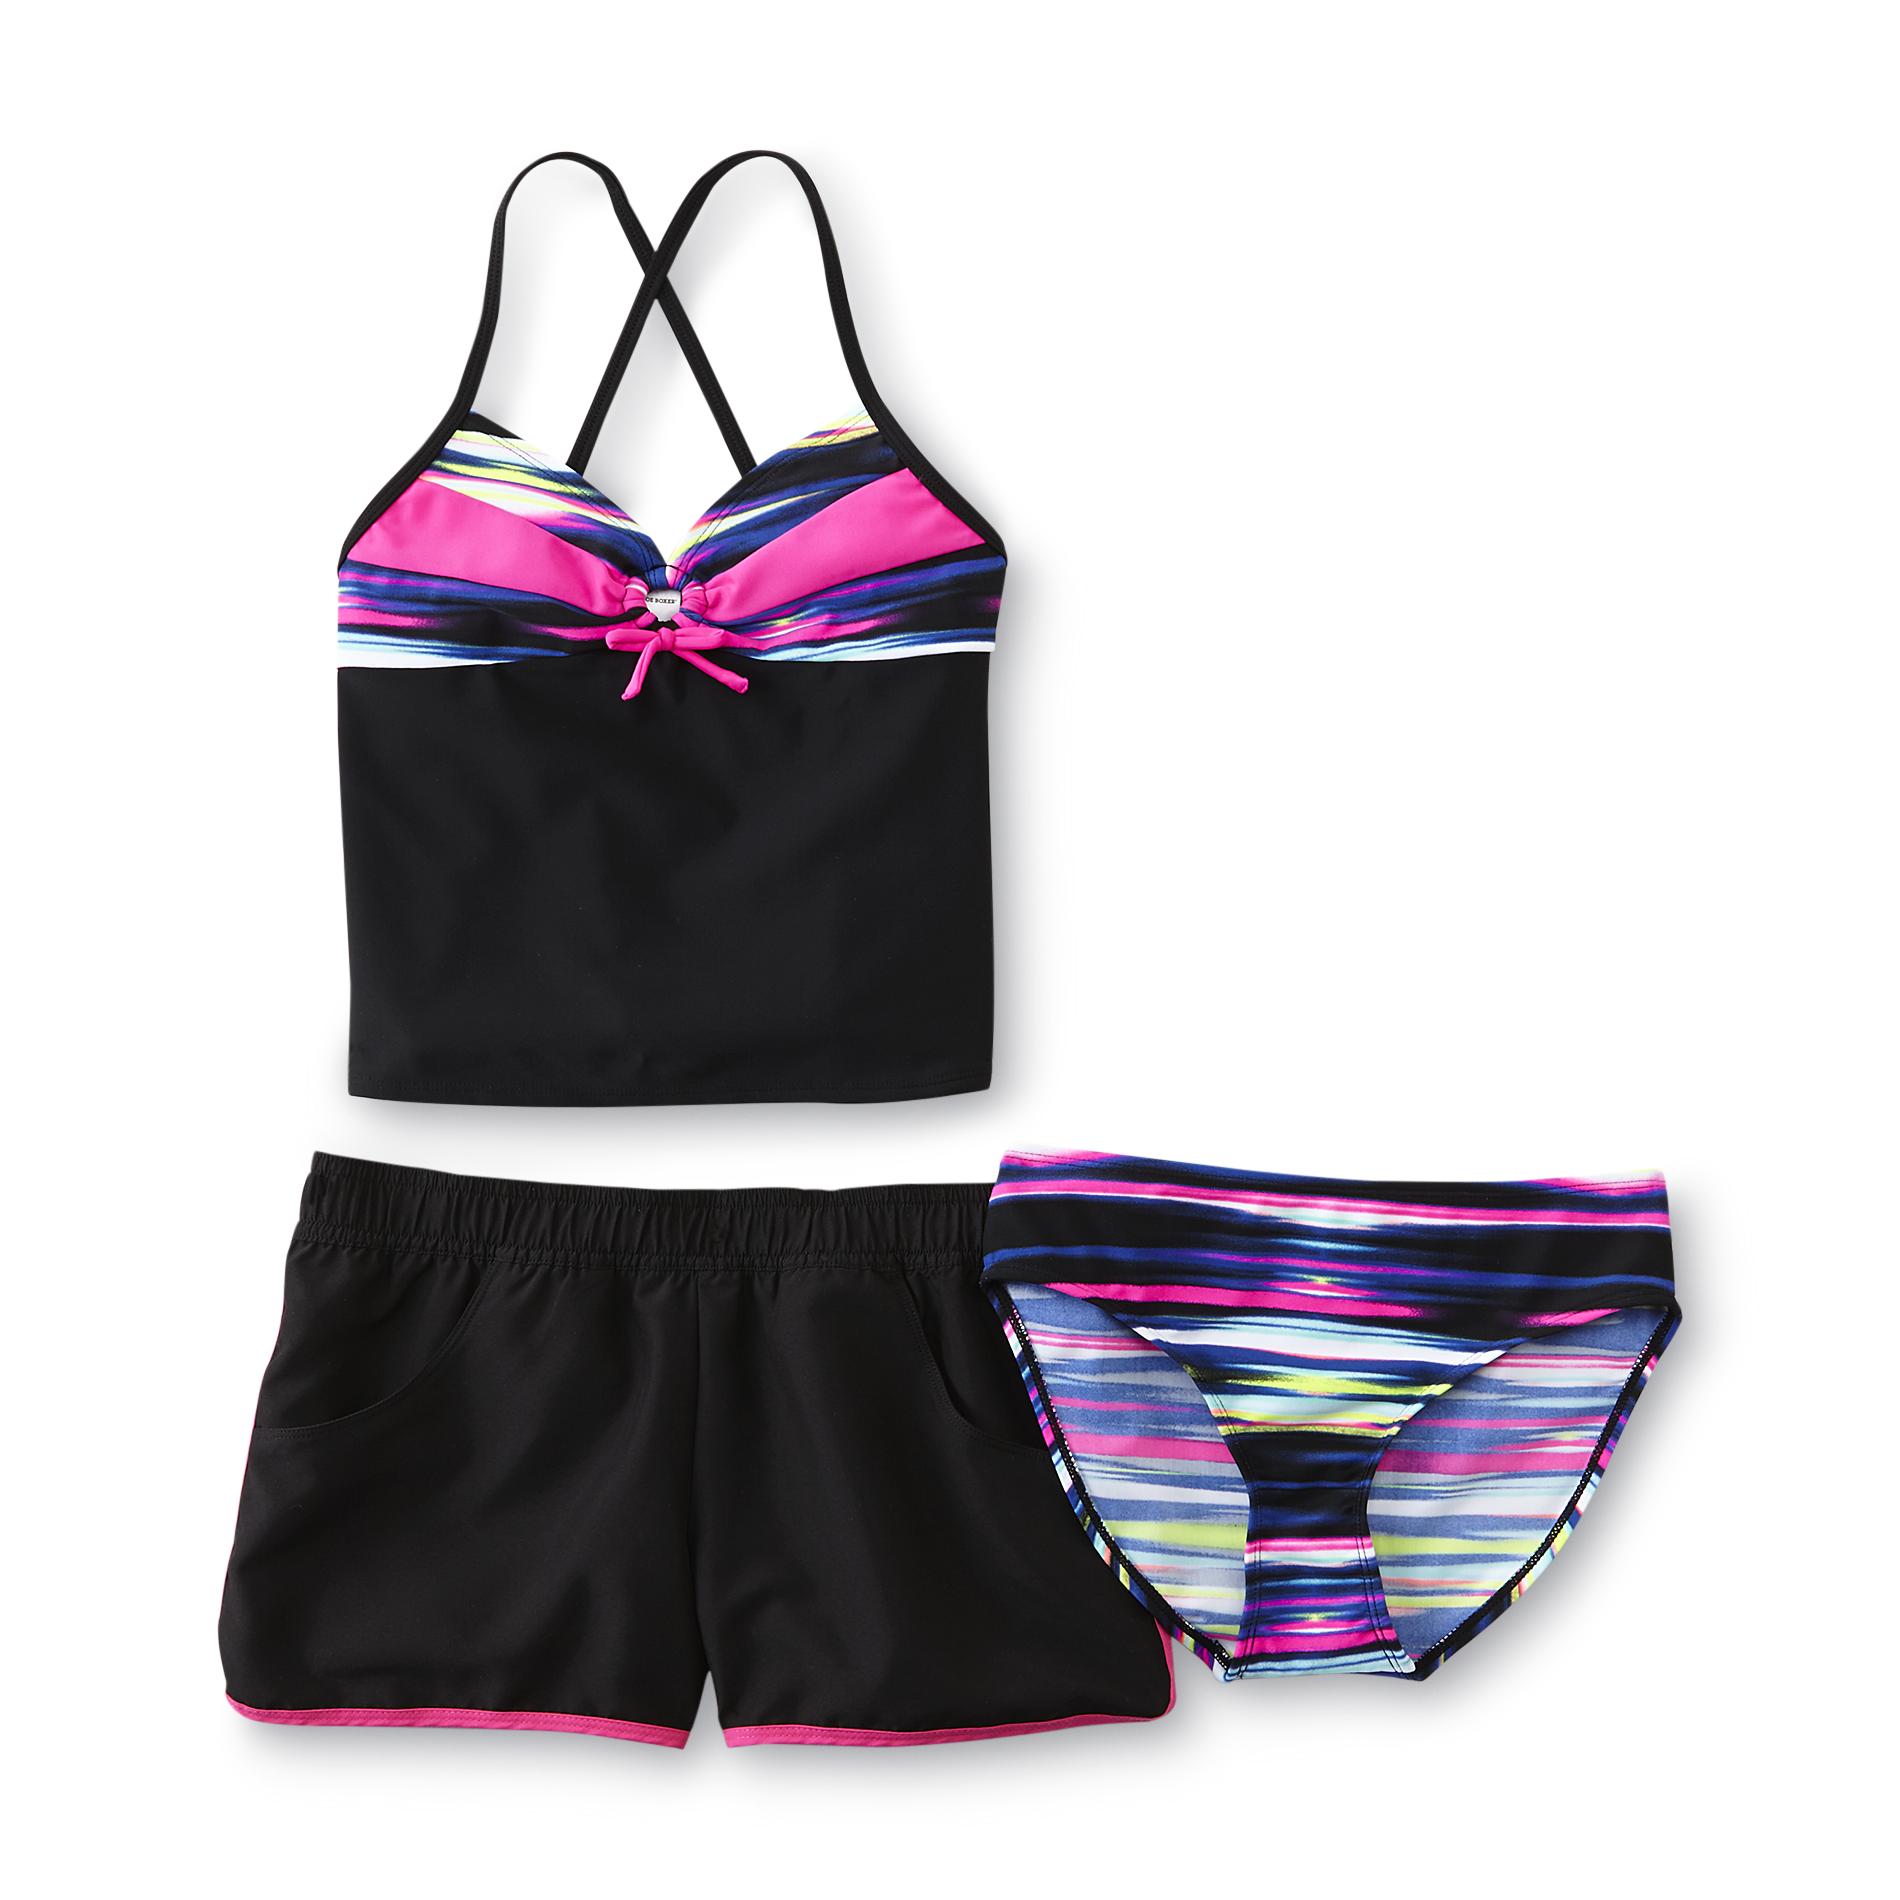 Girl’s Tankini Swim Top, Bottoms & Shorts $9.99 + More 50% Off Swimwear Deals!